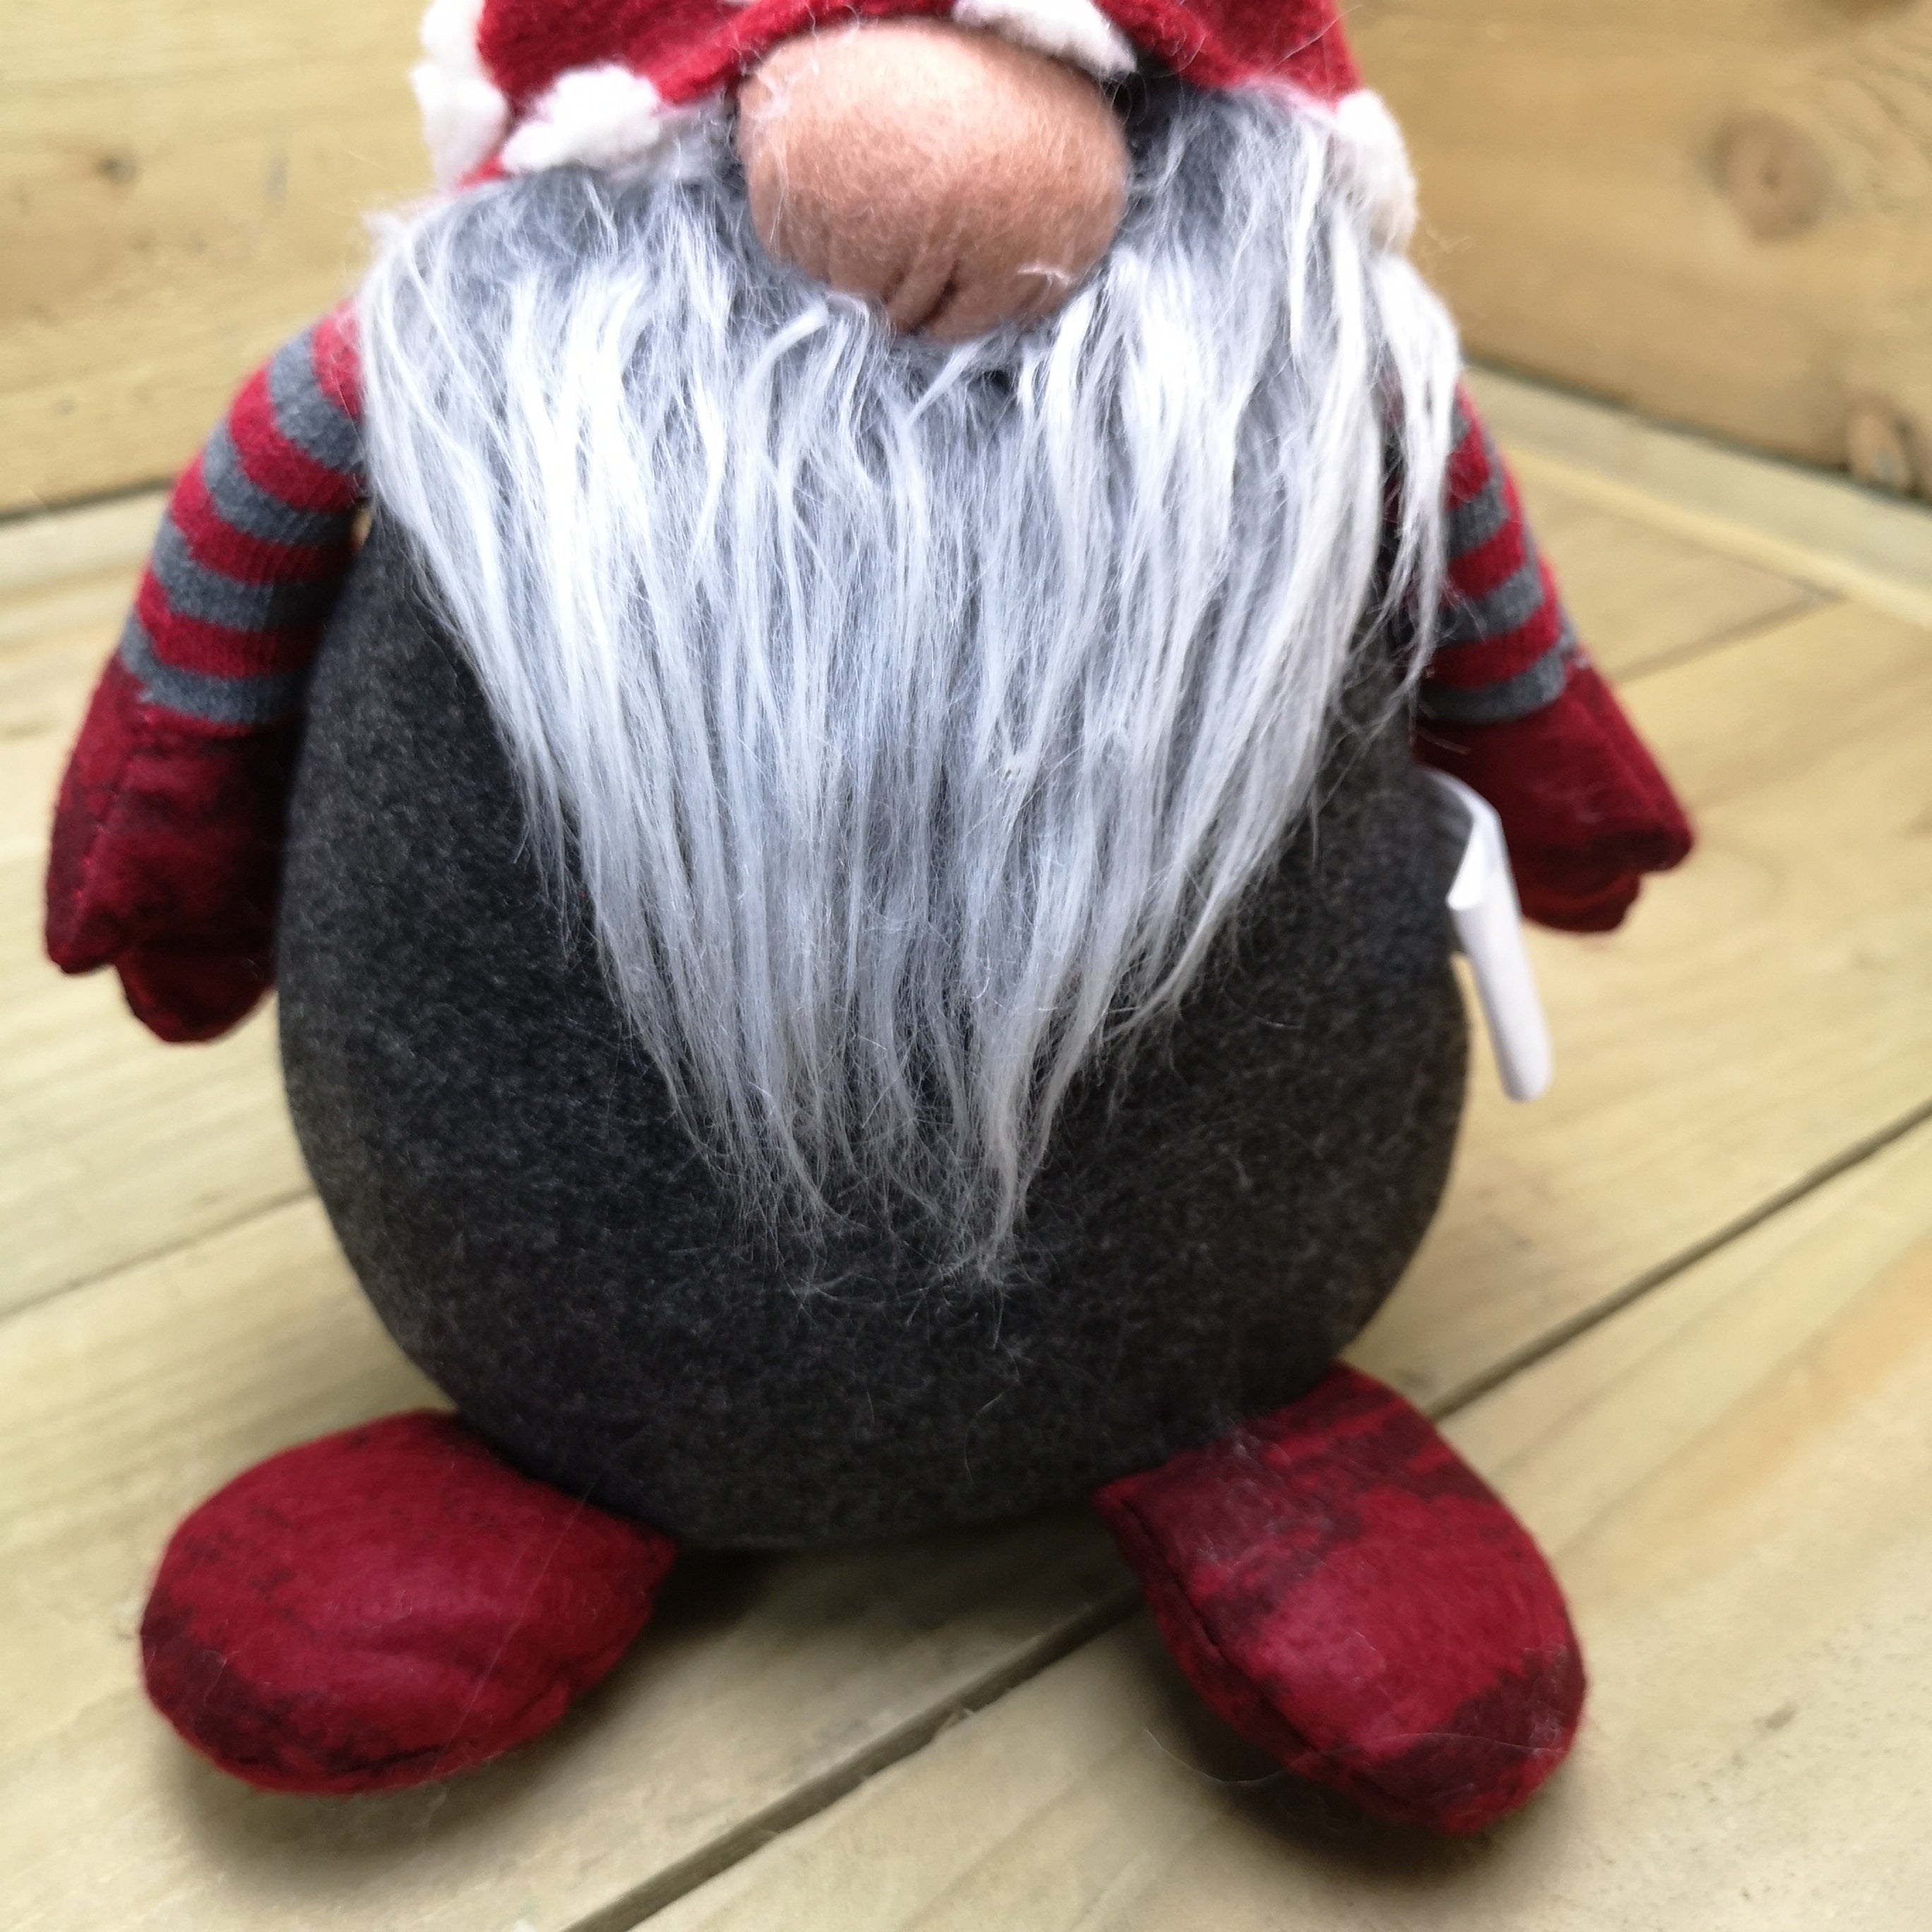 39cm Festive Grey & Red Bearded Christmas Gonk with White Polka Dot Hat